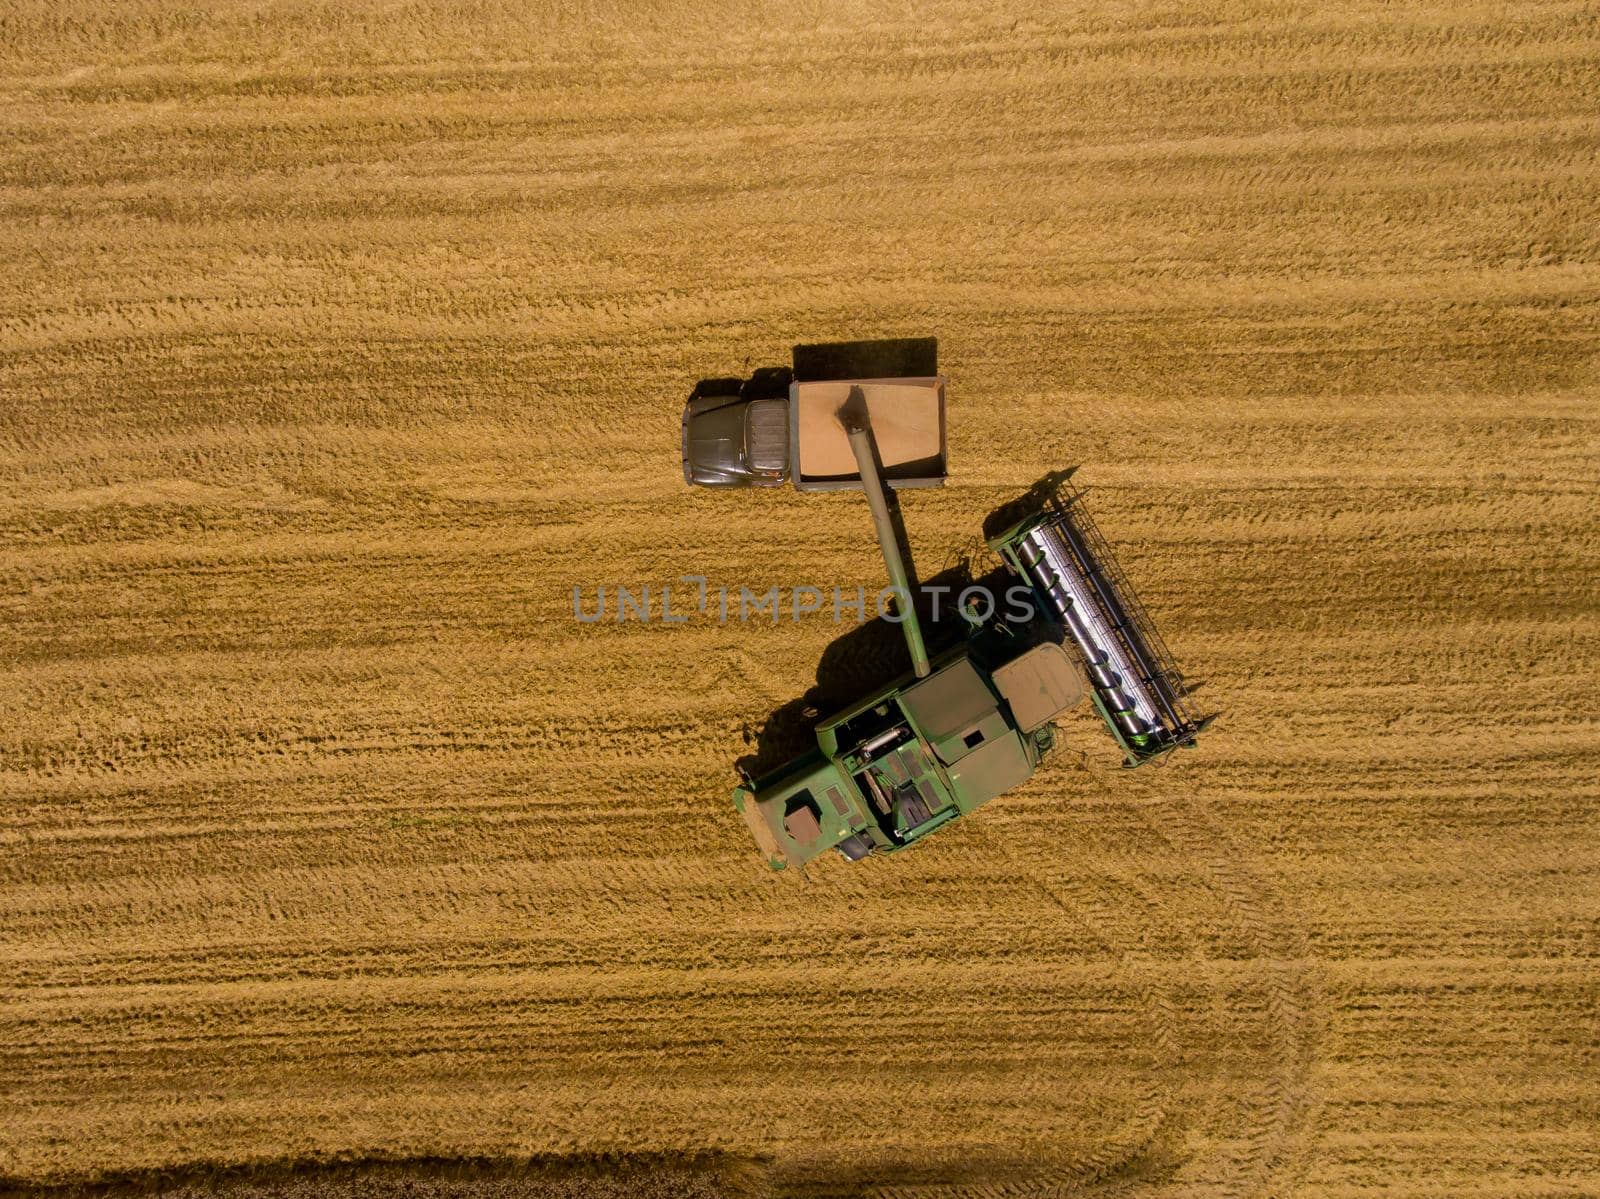 Harvester machine working in field. Aerial view.